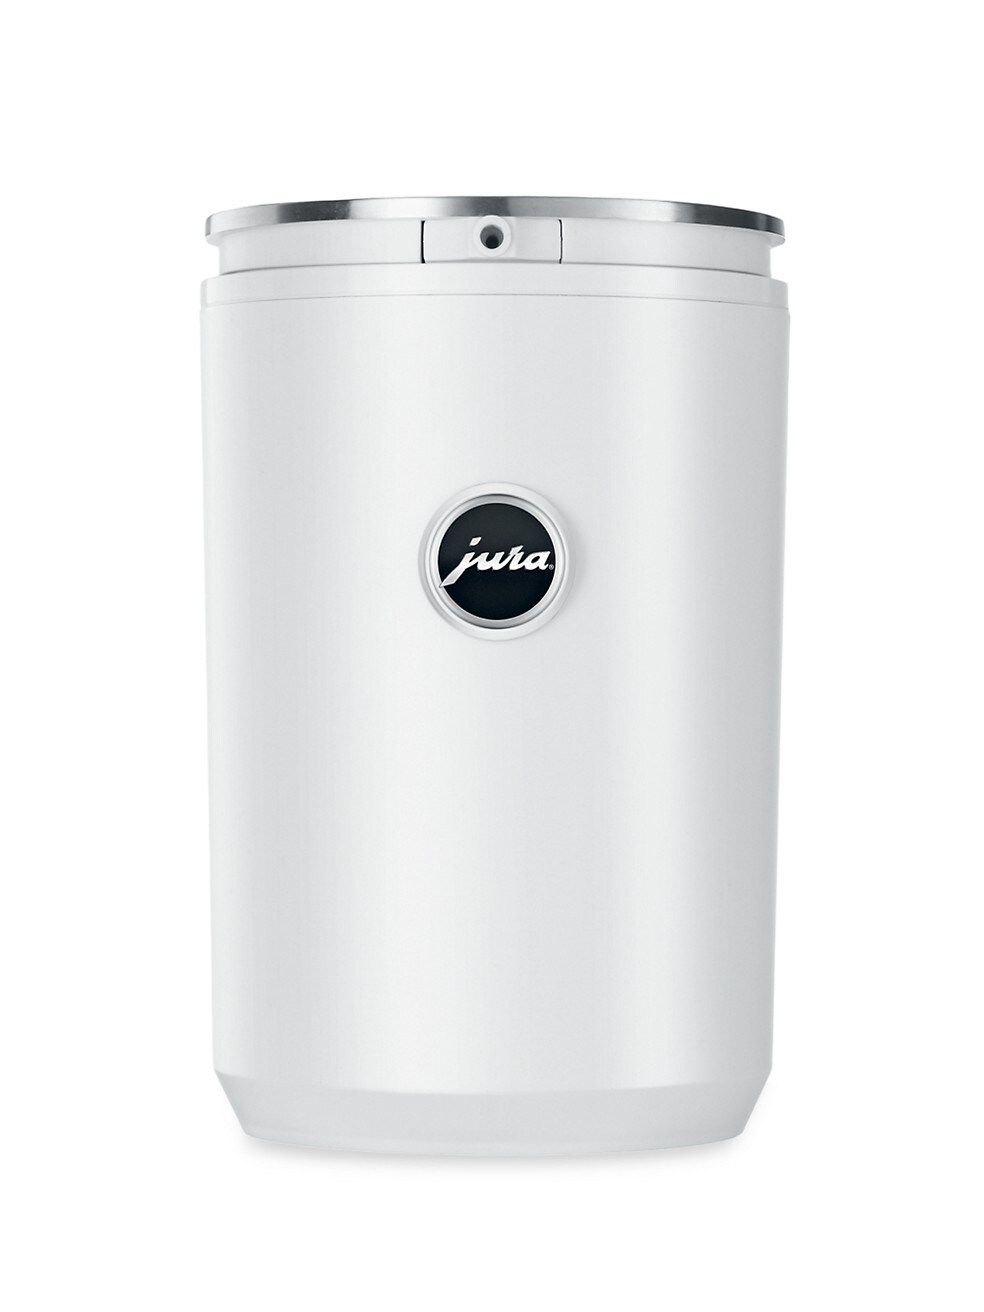 Jura Jura Cool Control Milk Cooler - 1 Liter | Saks Fifth Avenue